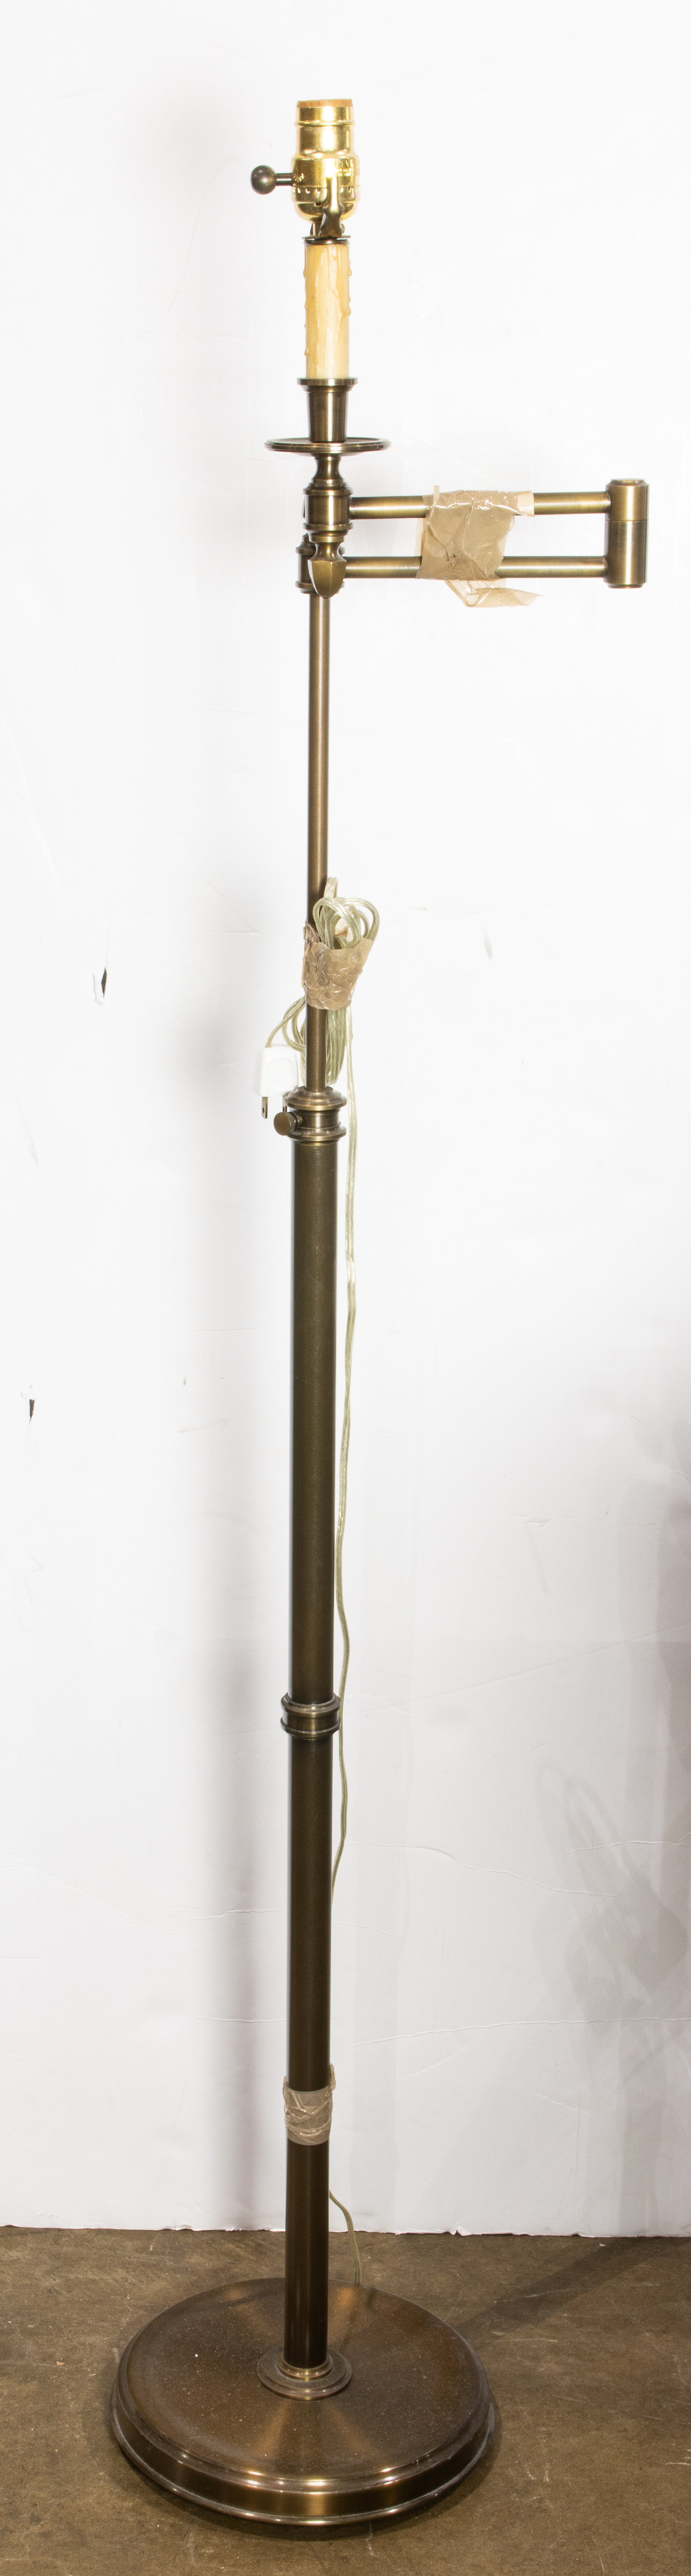 A BRONZED ADJUSTABLE FLOOR LAMP 3ce443